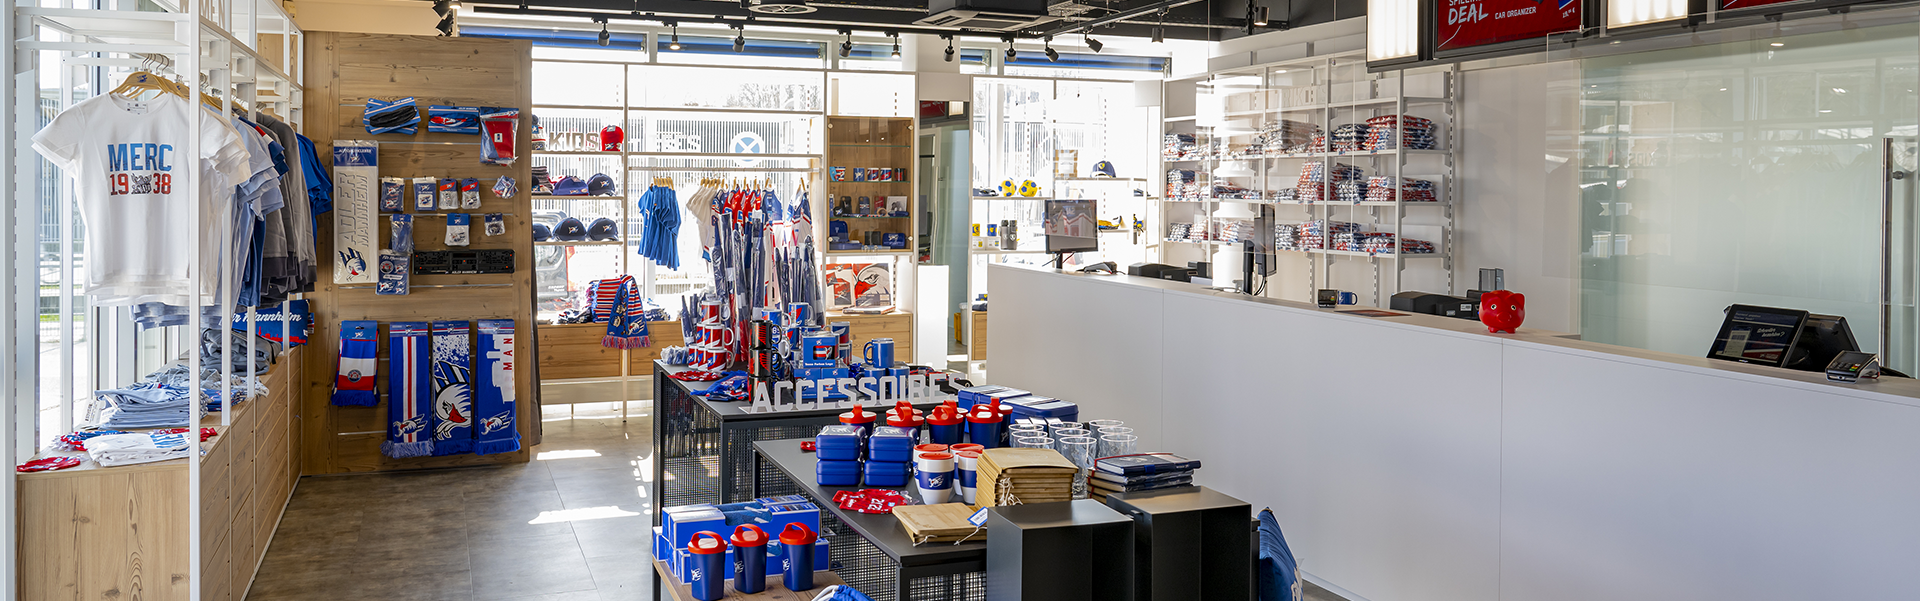 Der Fanshop der Adler Mannheim nutzt SAP Customer Checkout